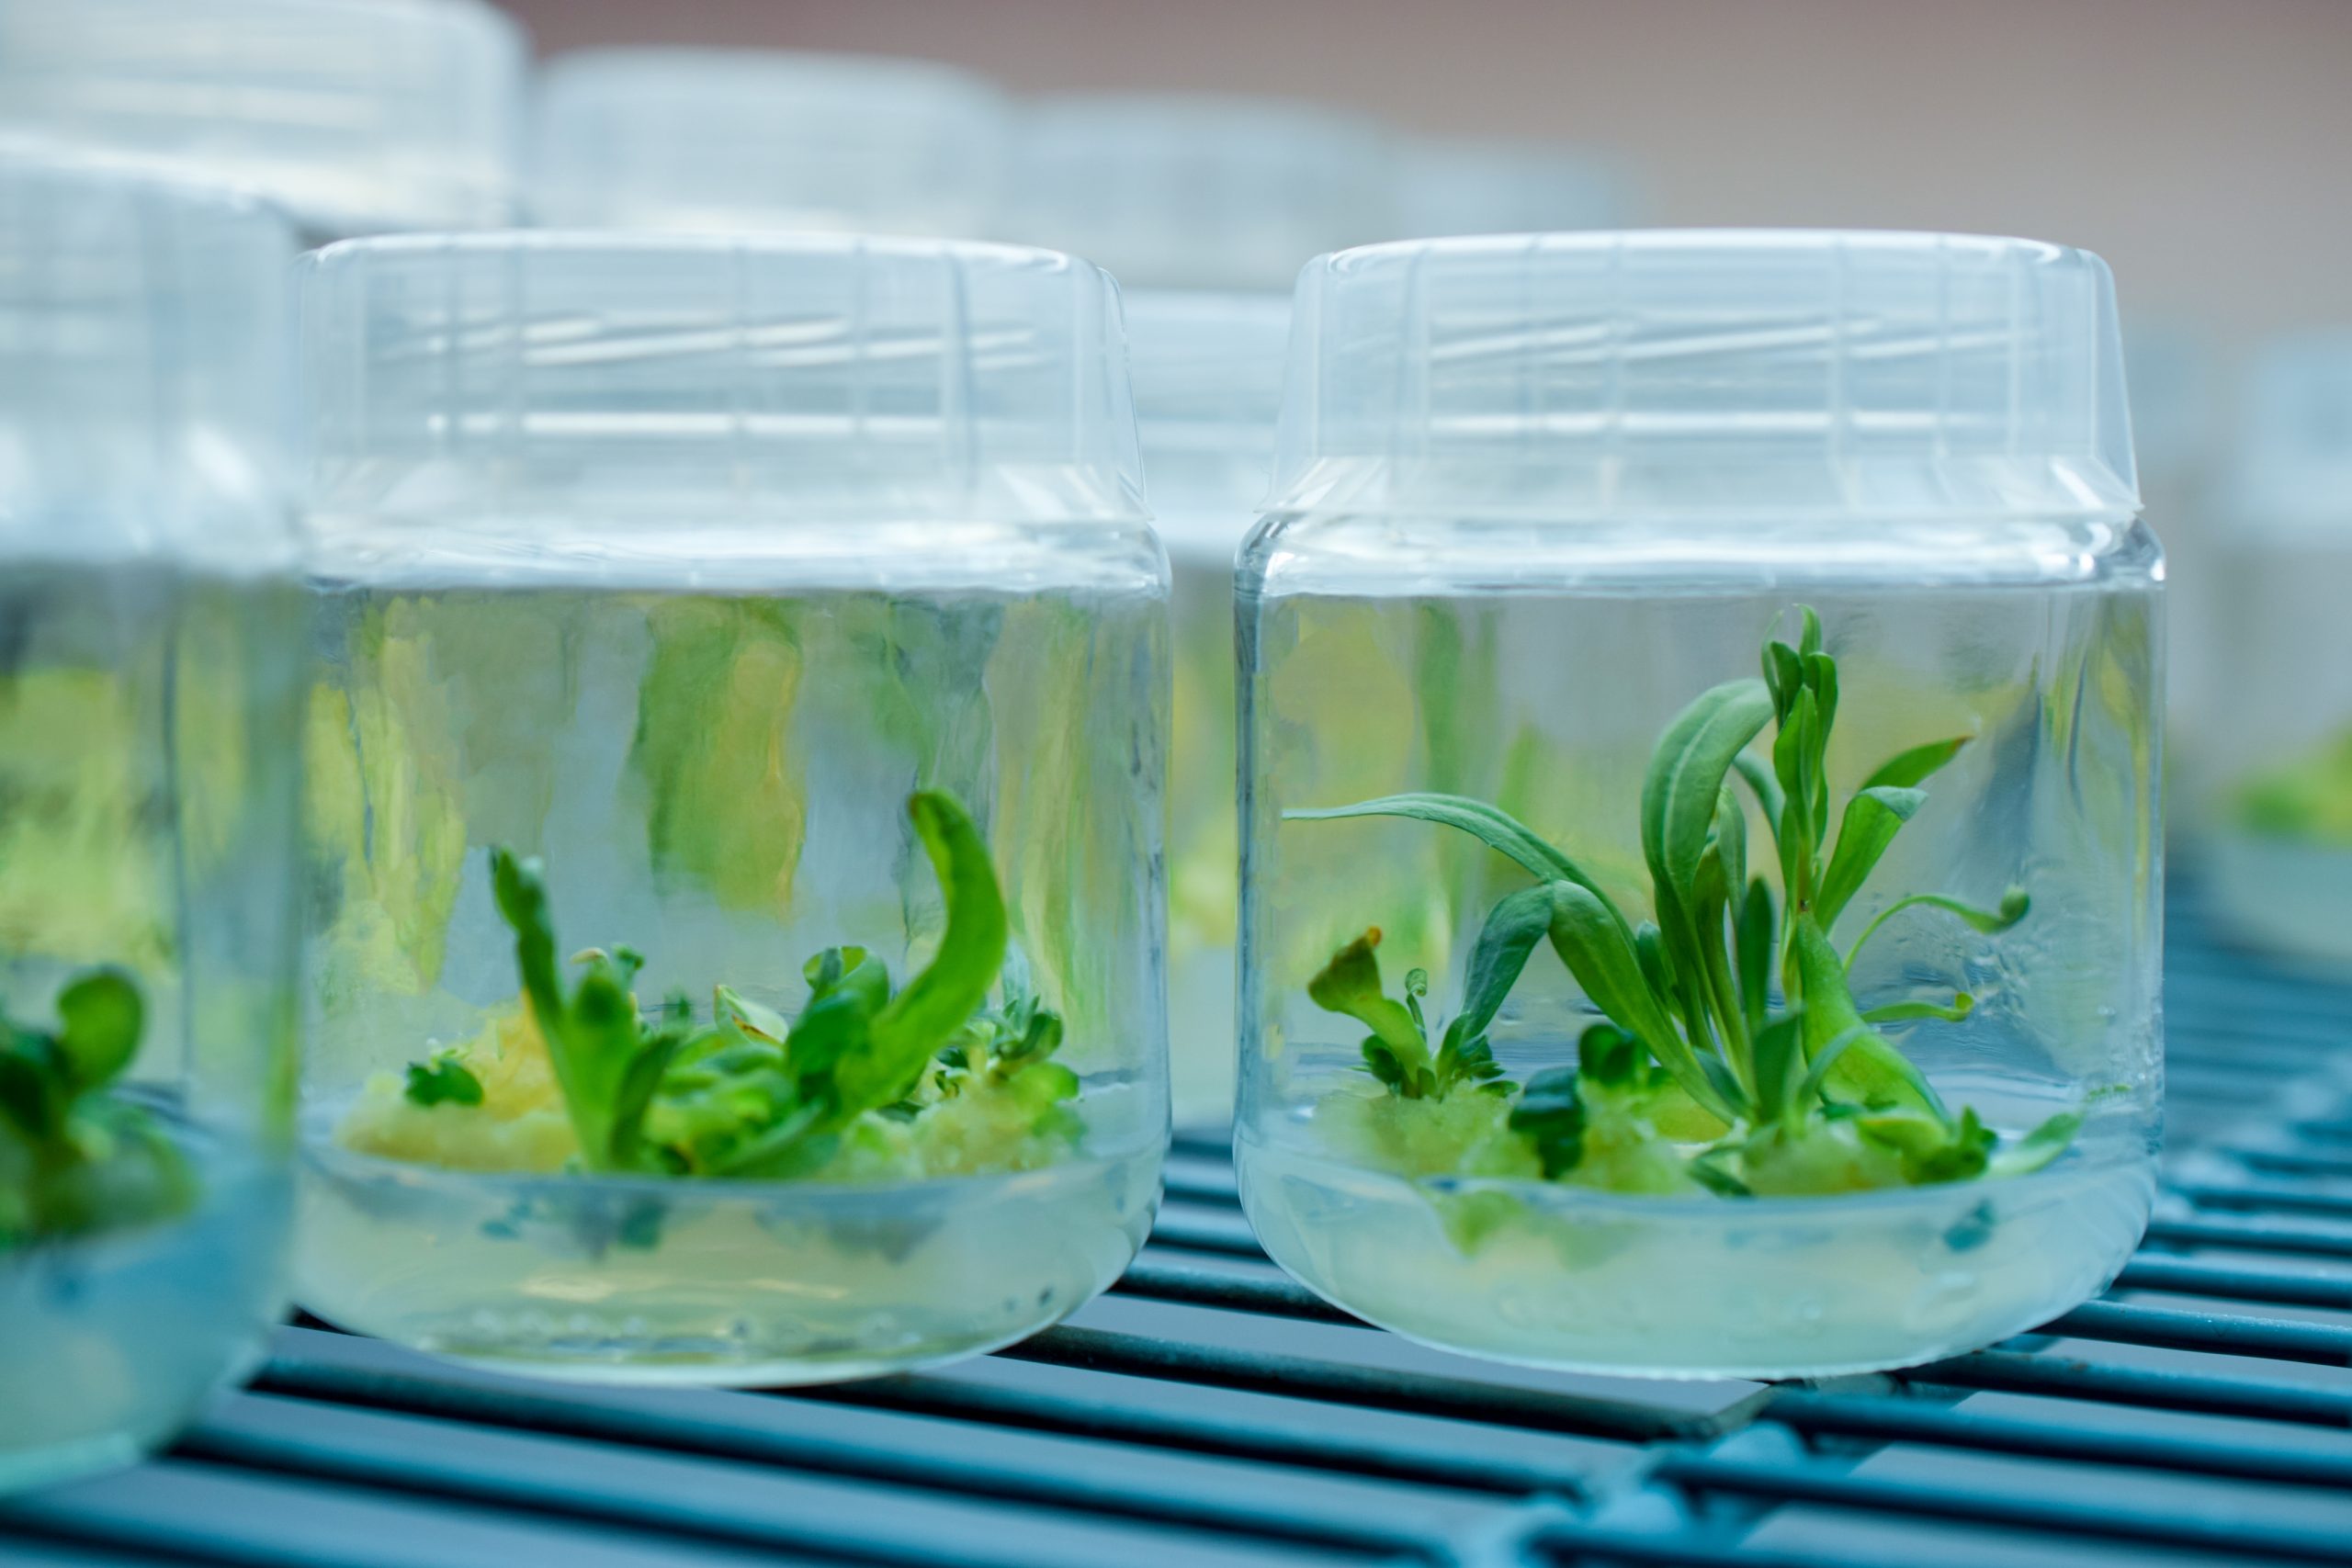 How to prepare culture media for plant tissue culture? Lab Associates